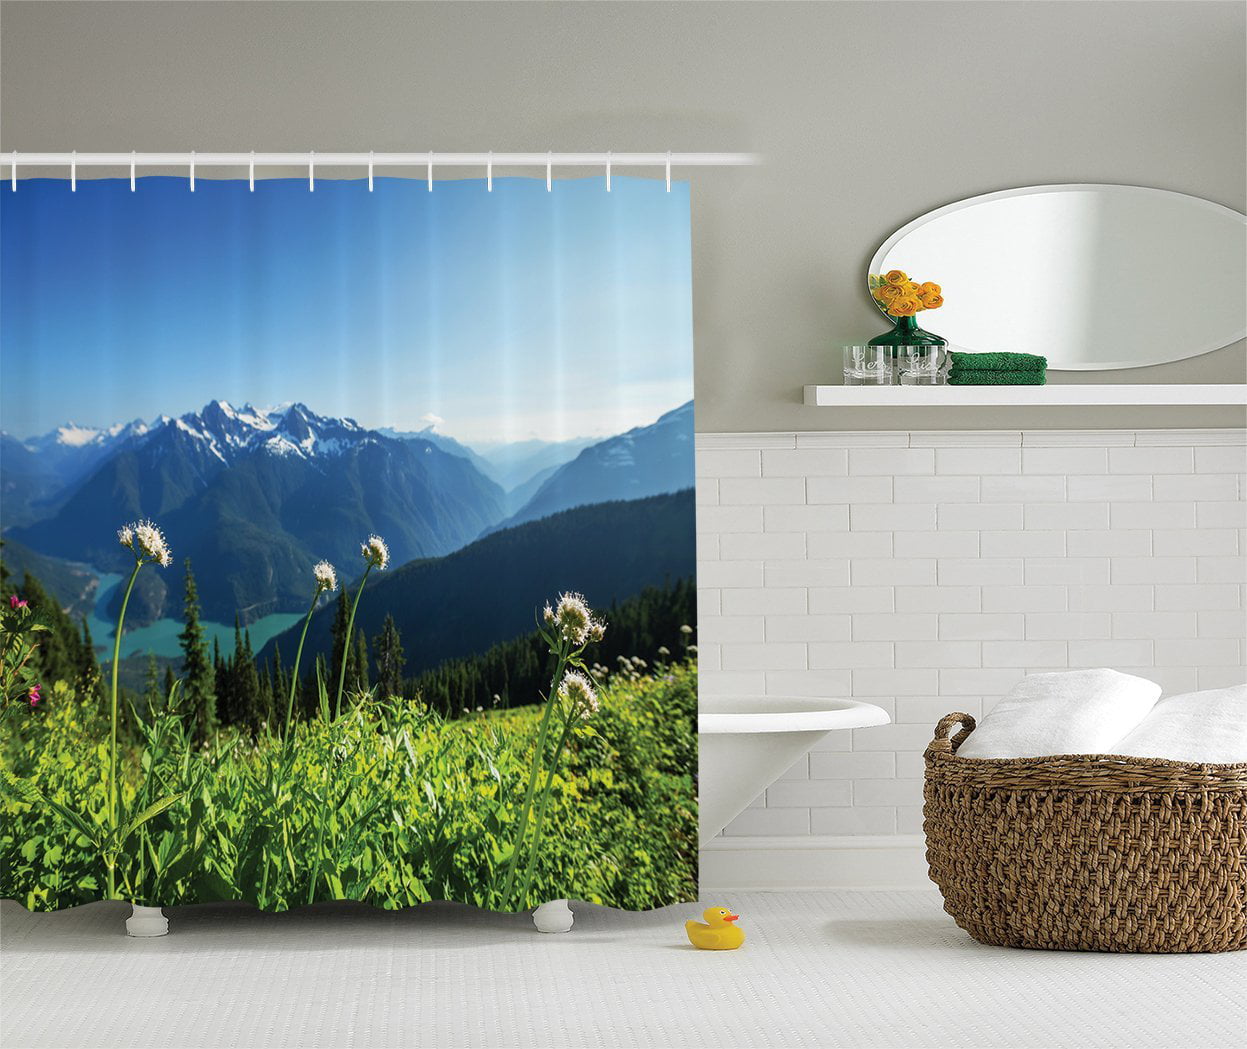 Details about   72x72" Bathroom Waterproof European Balcony Lake Mountain Shower Curtain Sets 